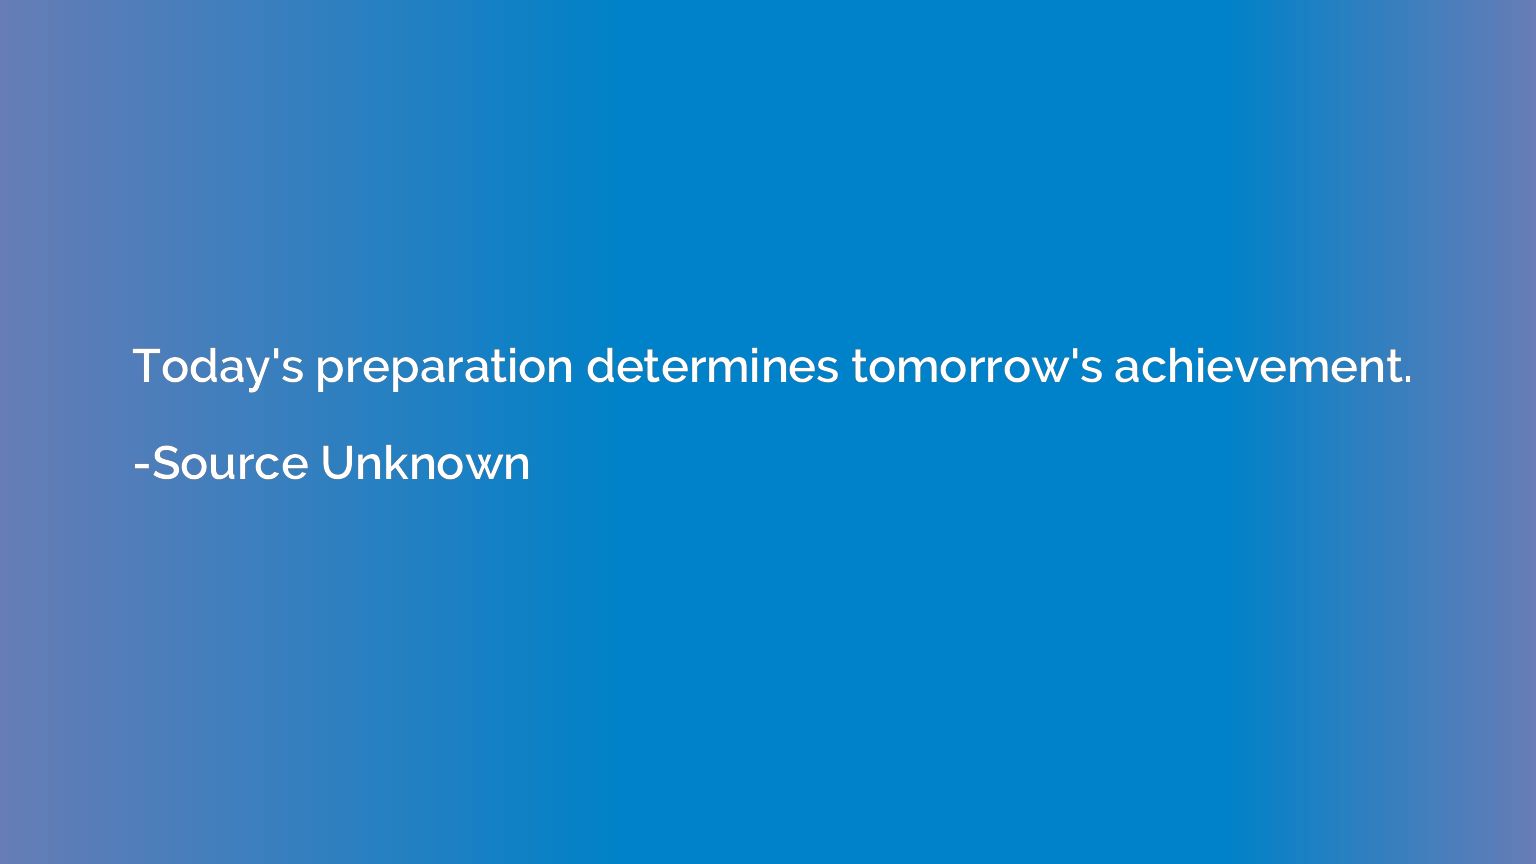 Today's preparation determines tomorrow's achievement.